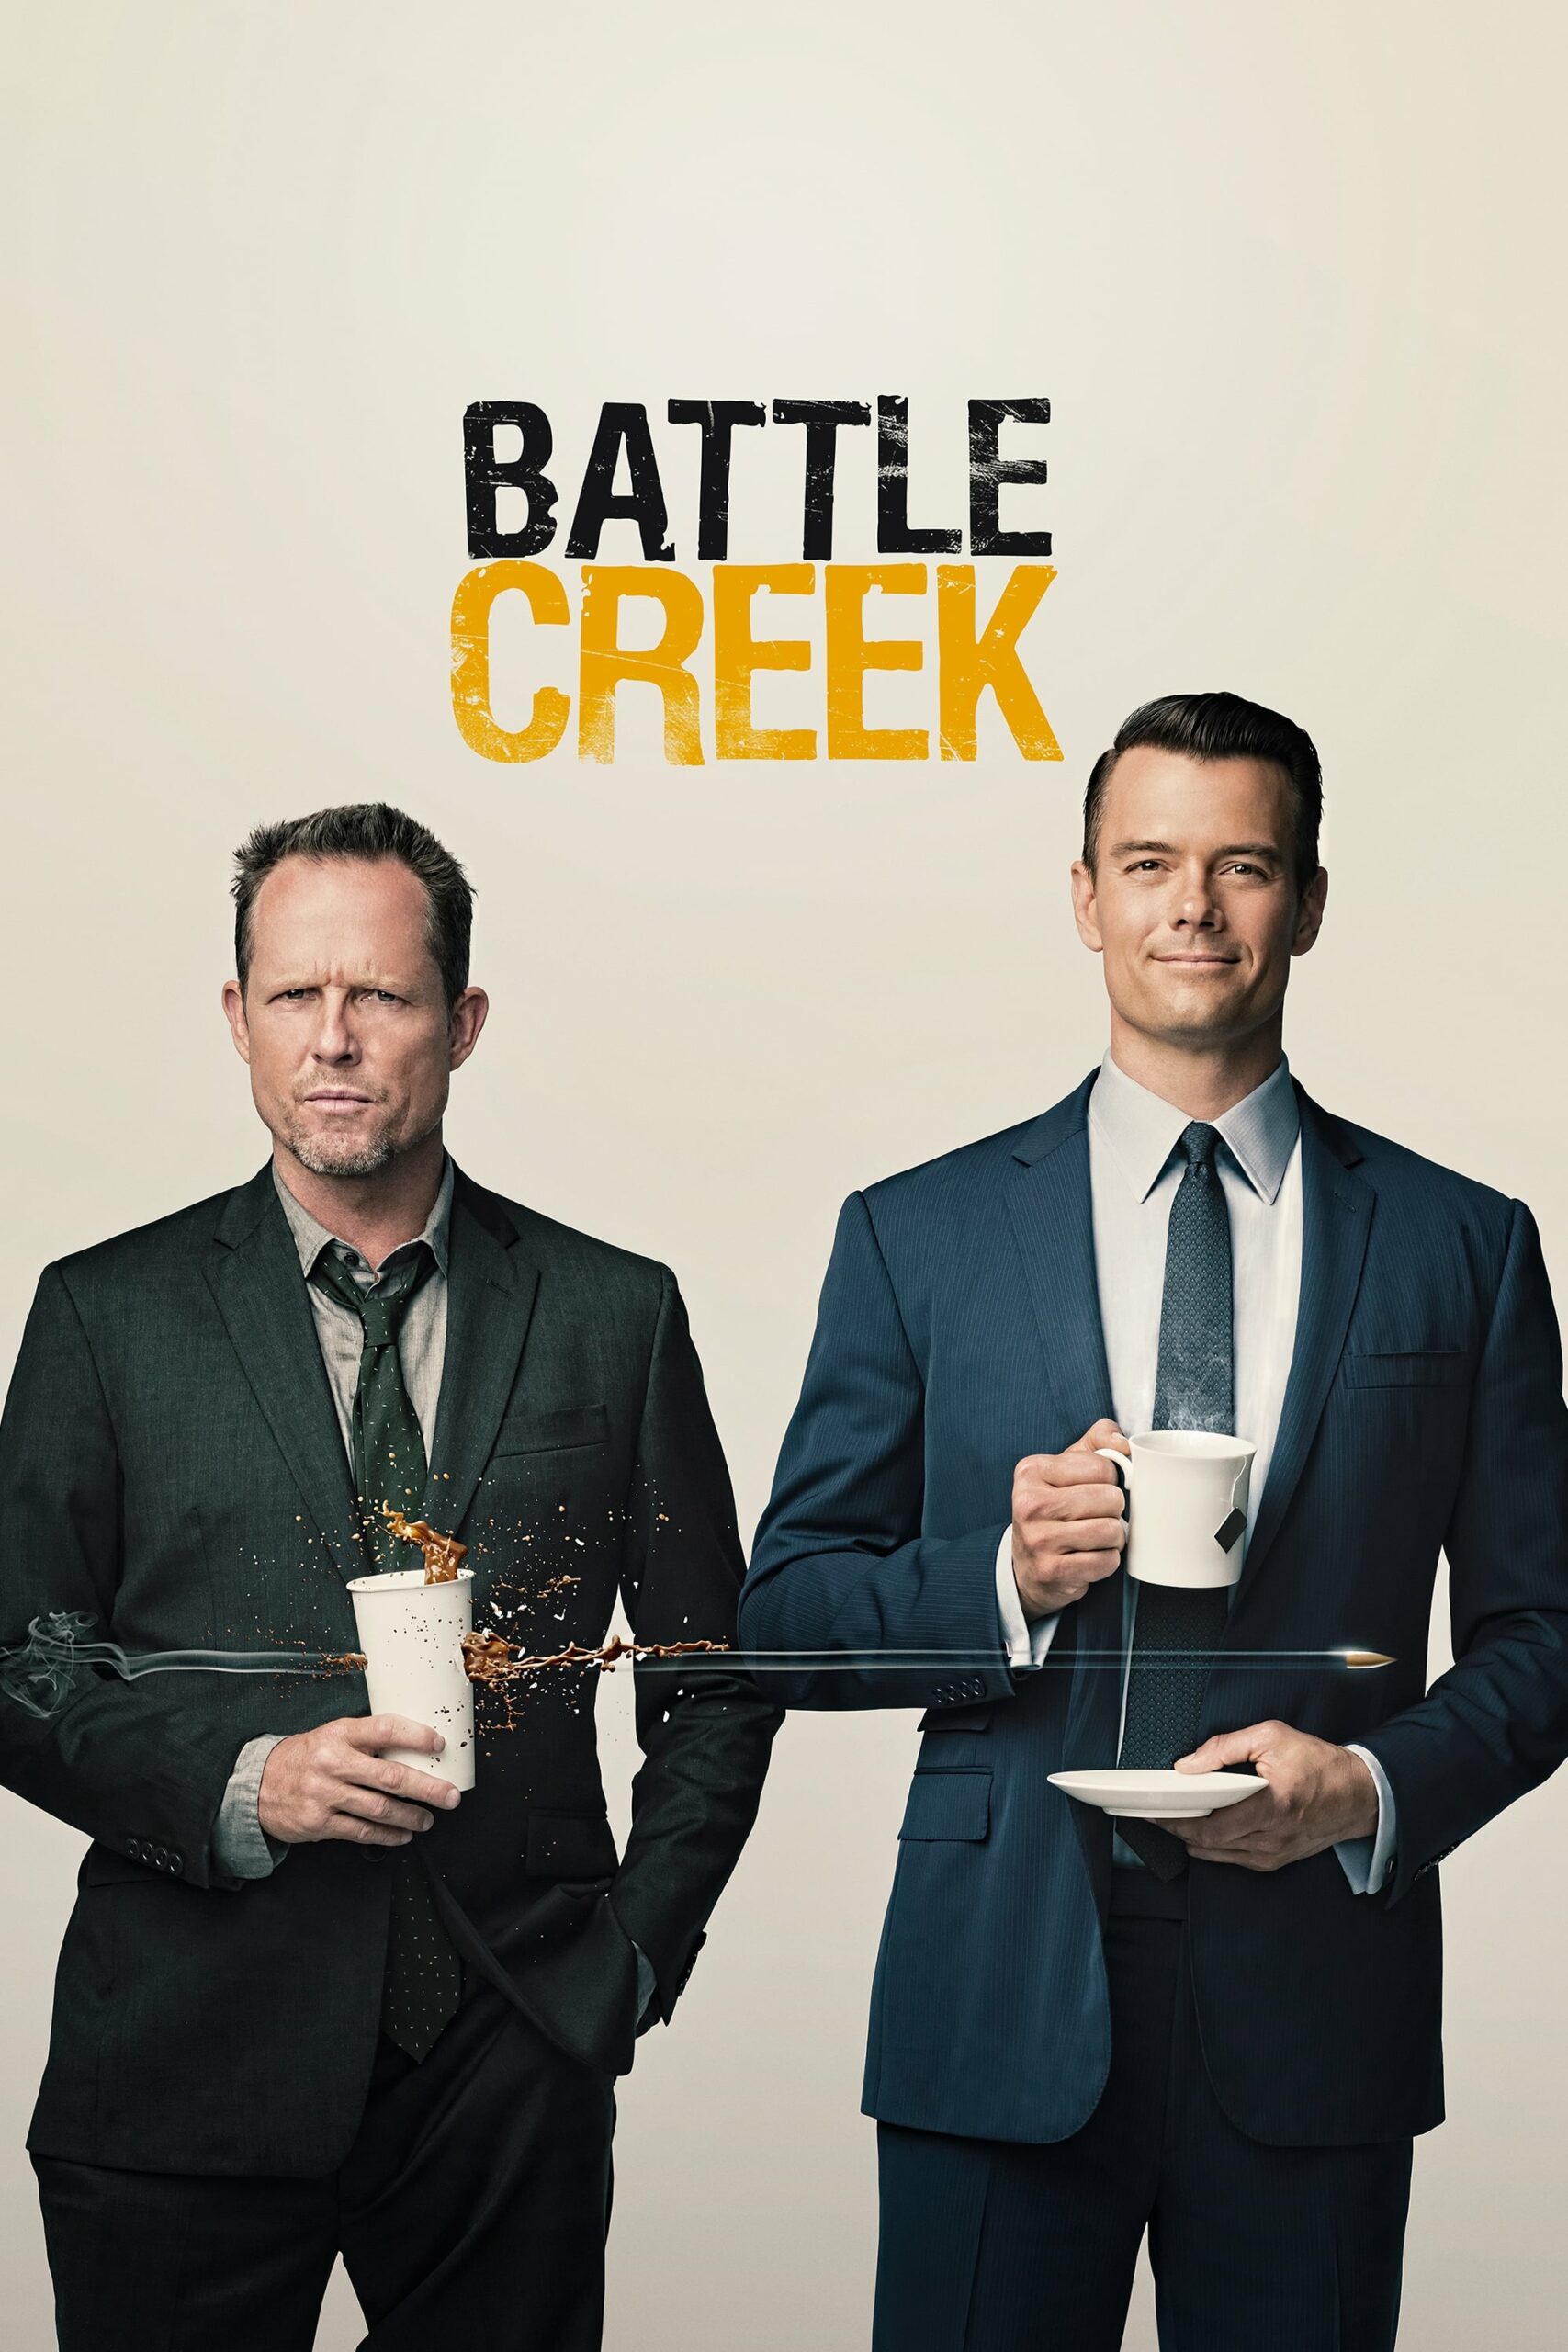 Plakát pro film “Policie Battle Creek”